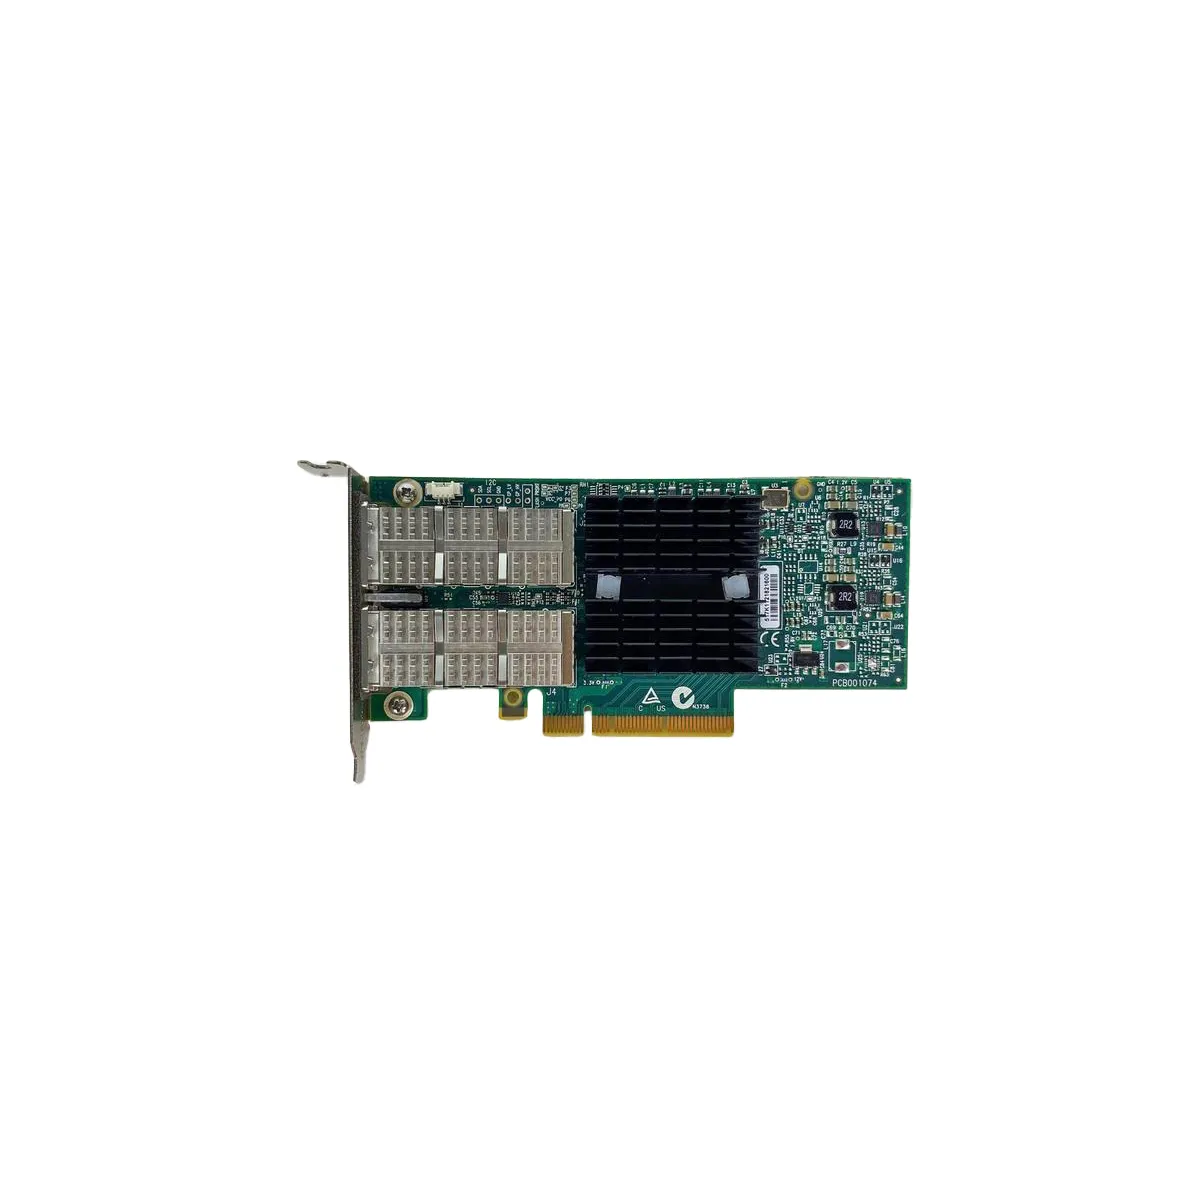 HP MCX354A-FCBT Dual Port - 56Gbps QSFP Low Profile PCIe-x8 HCA